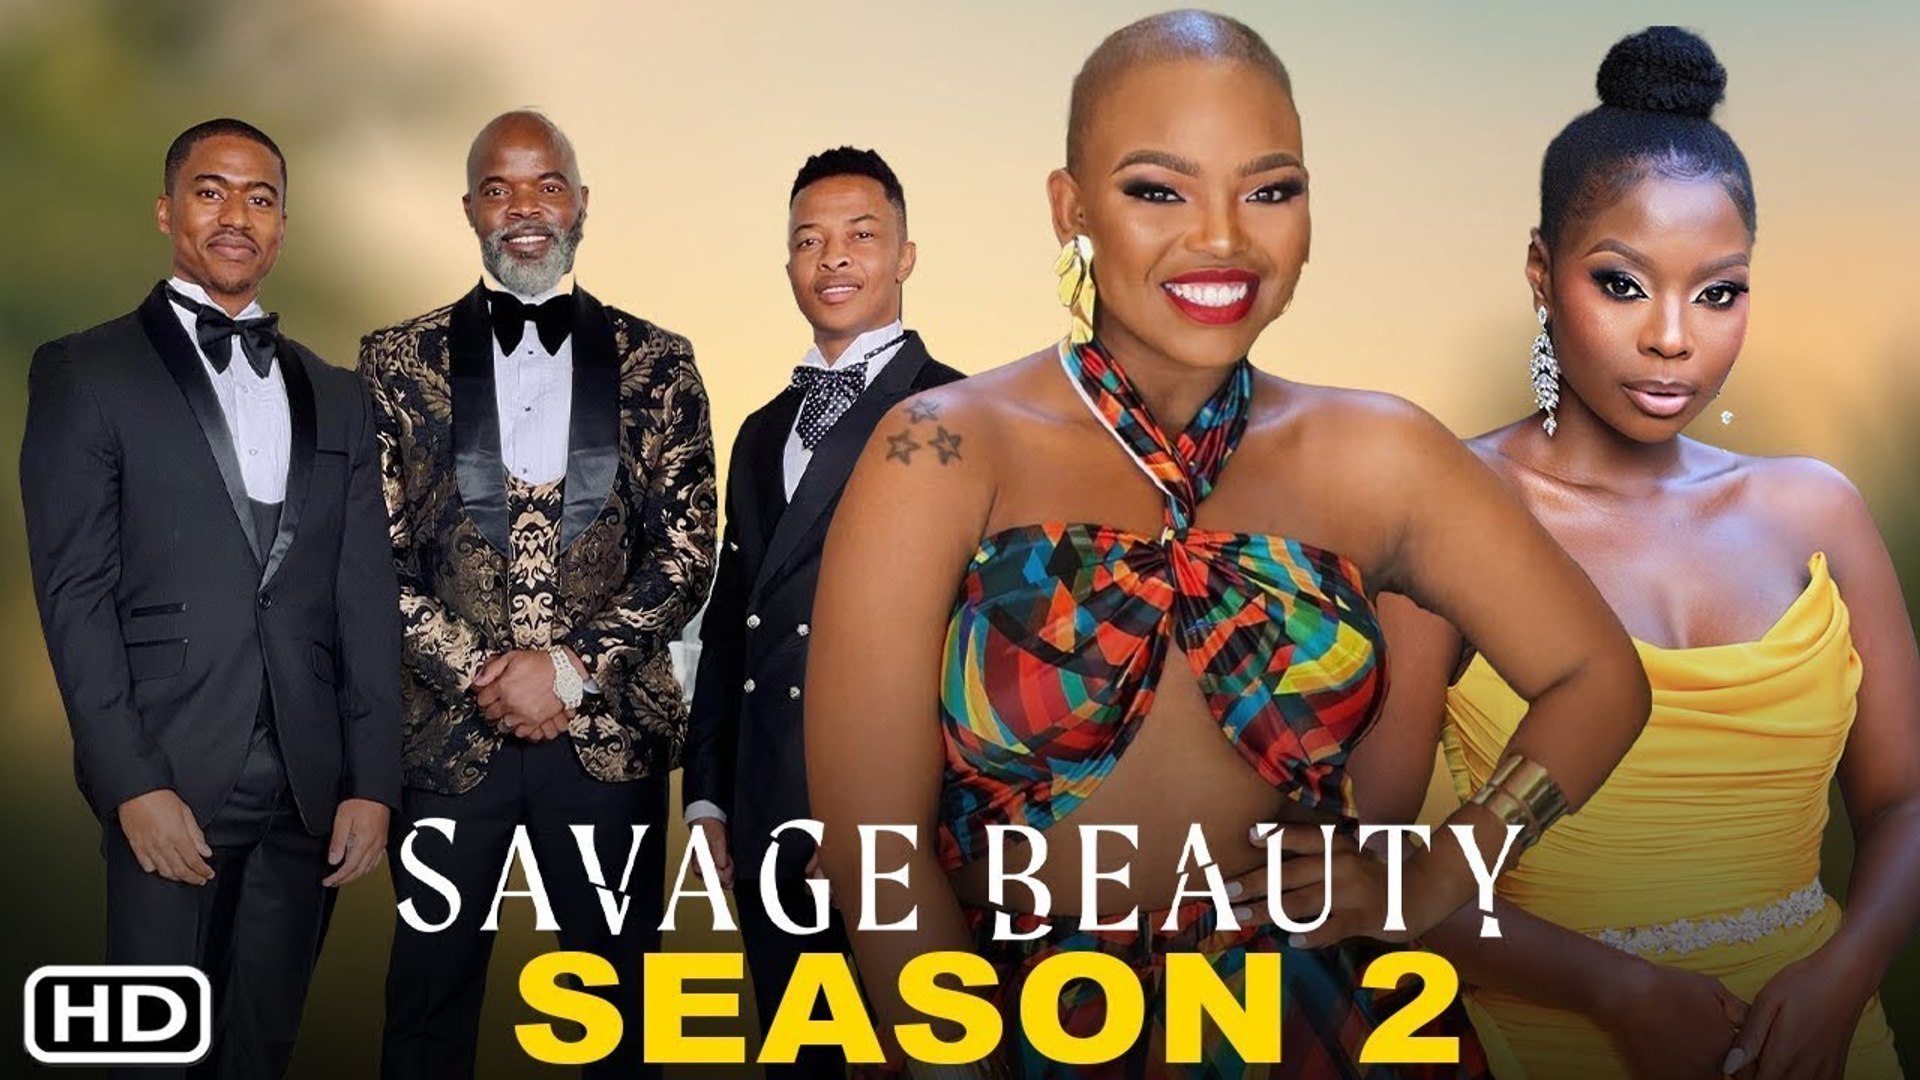 Savage Beauty Season 2 Trailer - Netflix - video Dailymotion